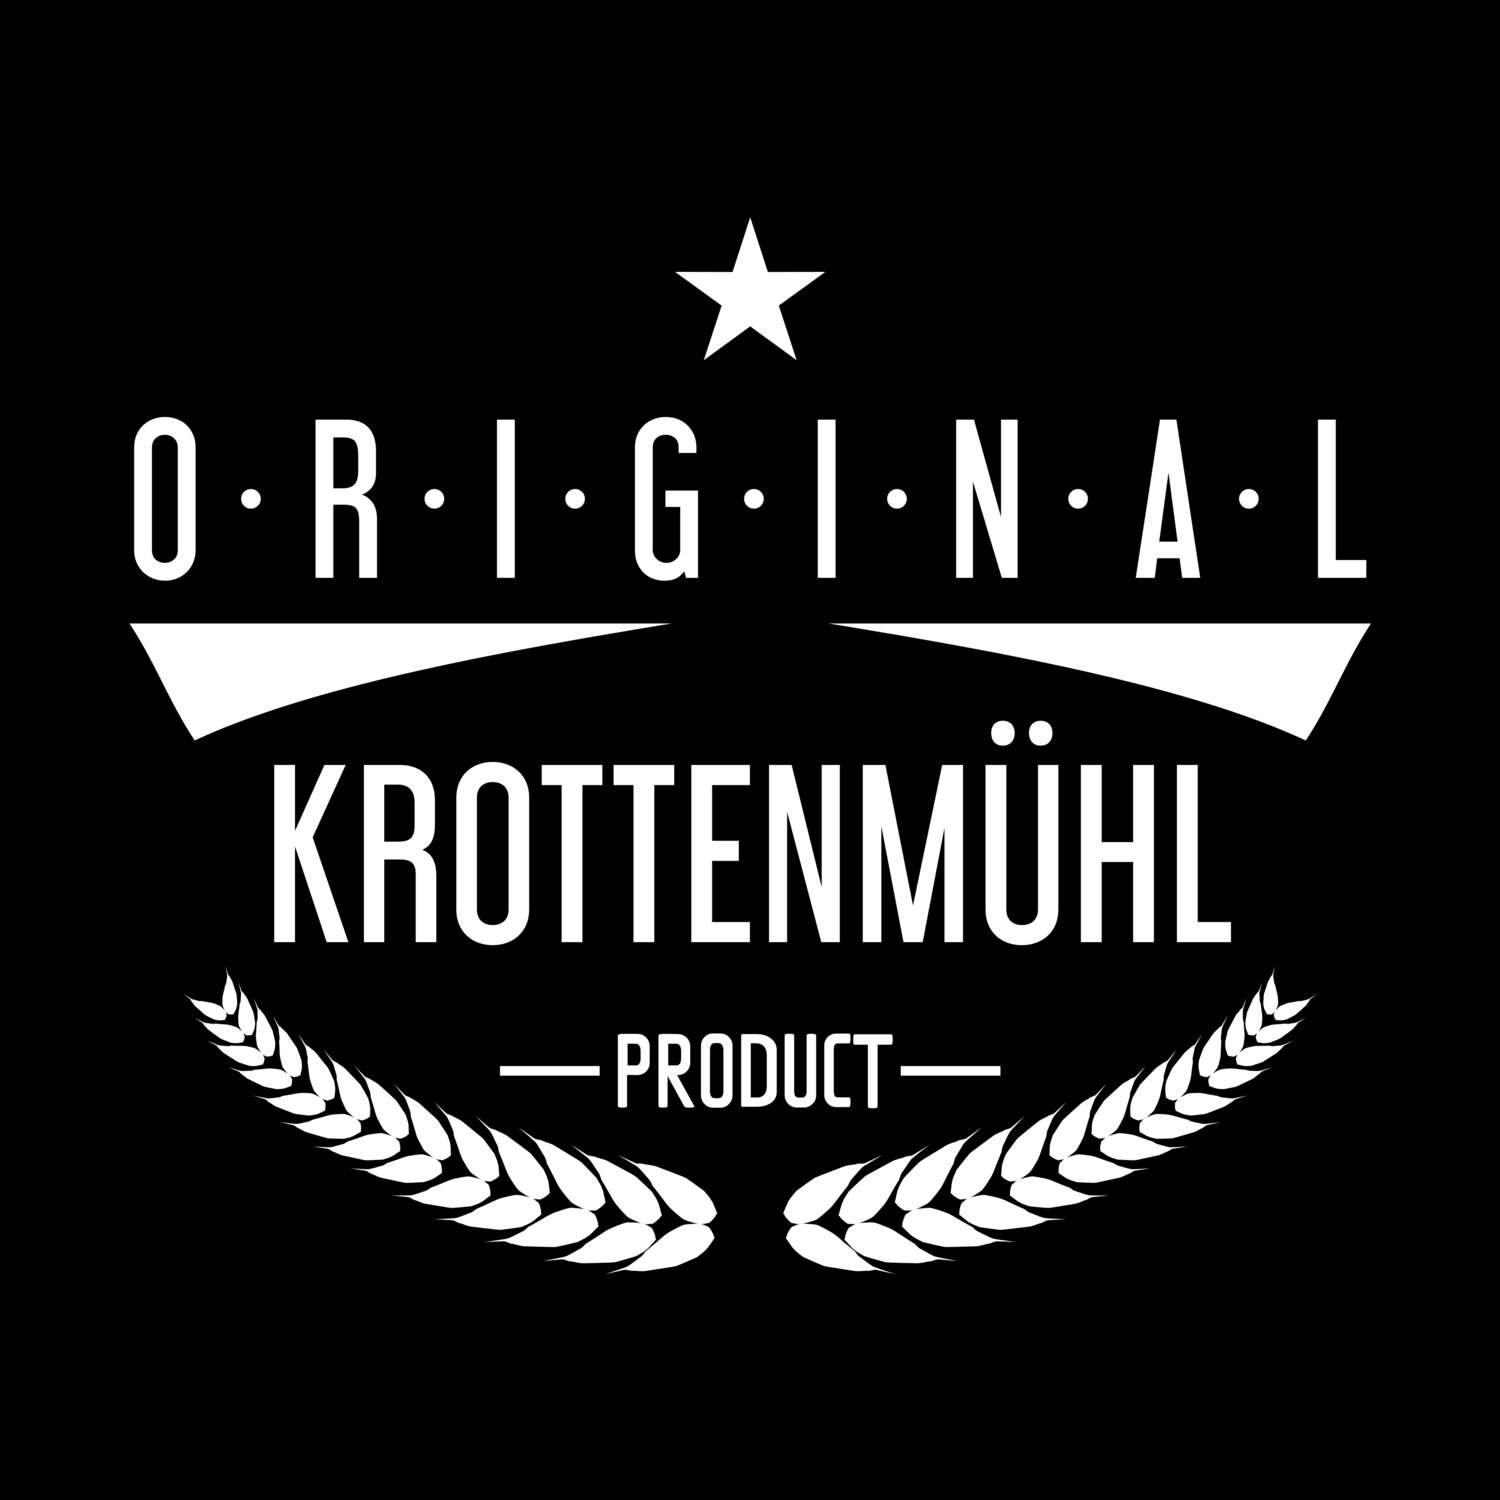 Krottenmühl T-Shirt »Original Product«